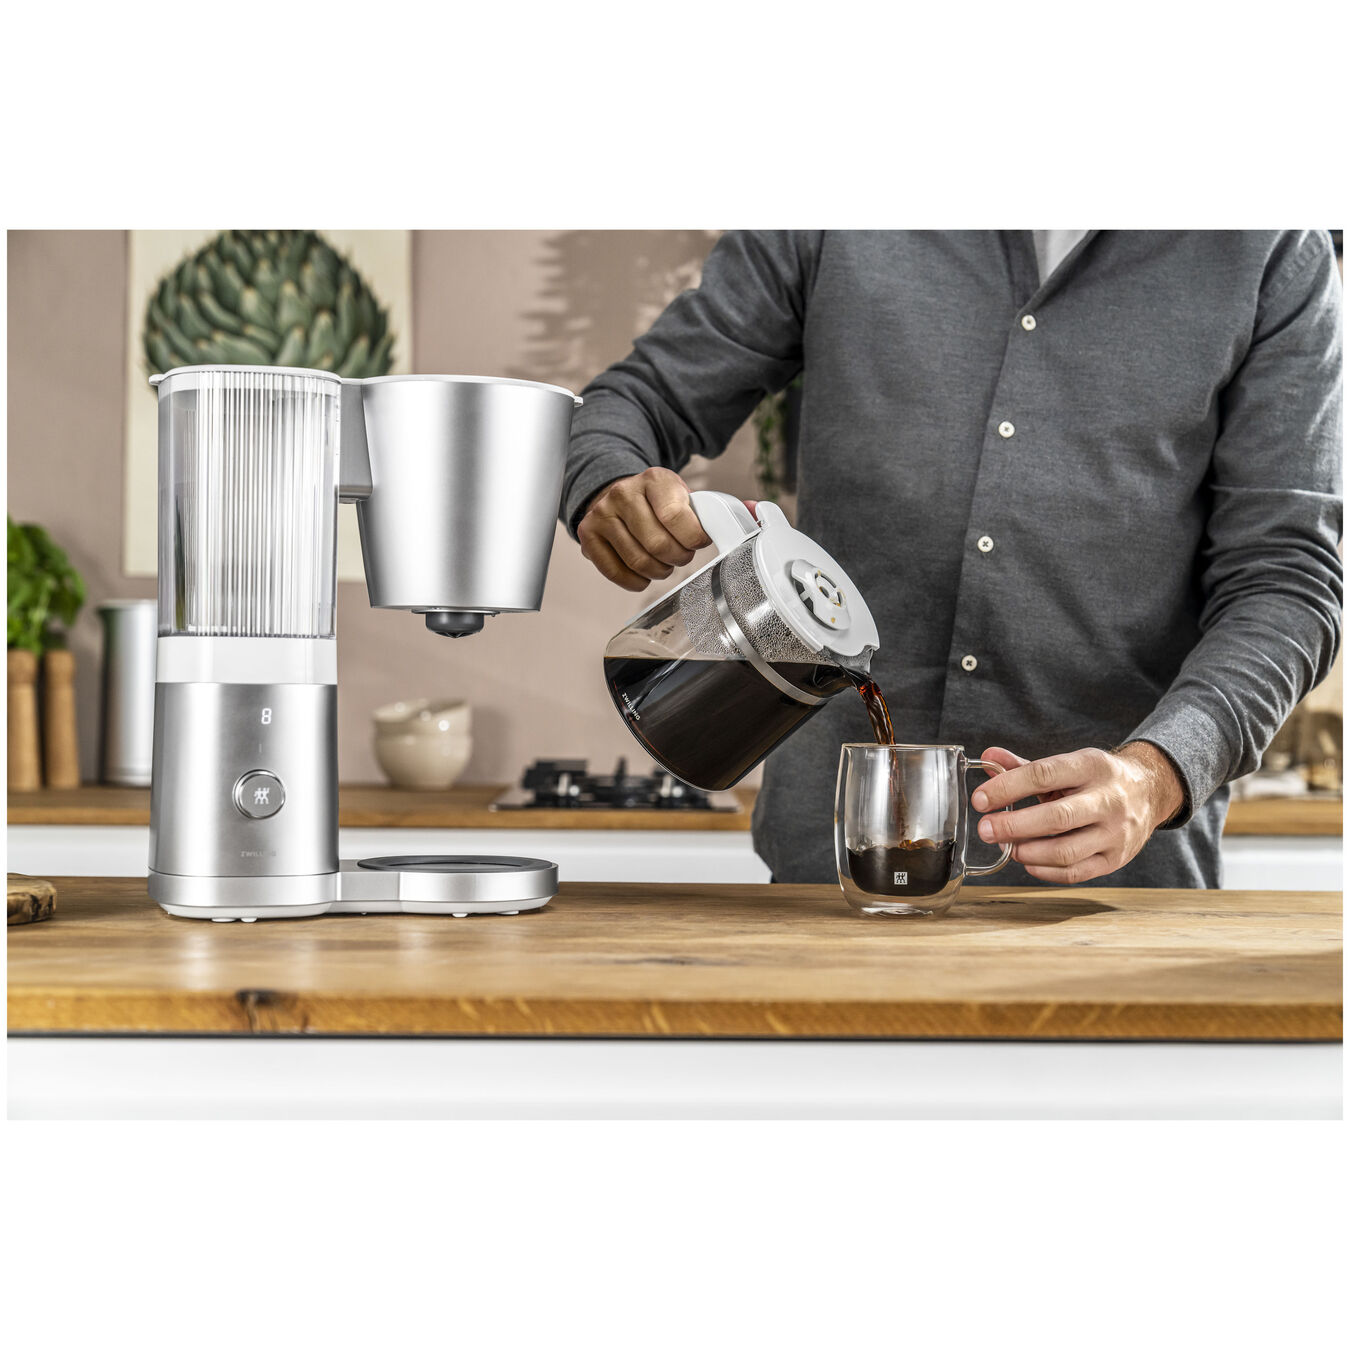 Drip coffee maker, 1,5 l, silver,,large 6